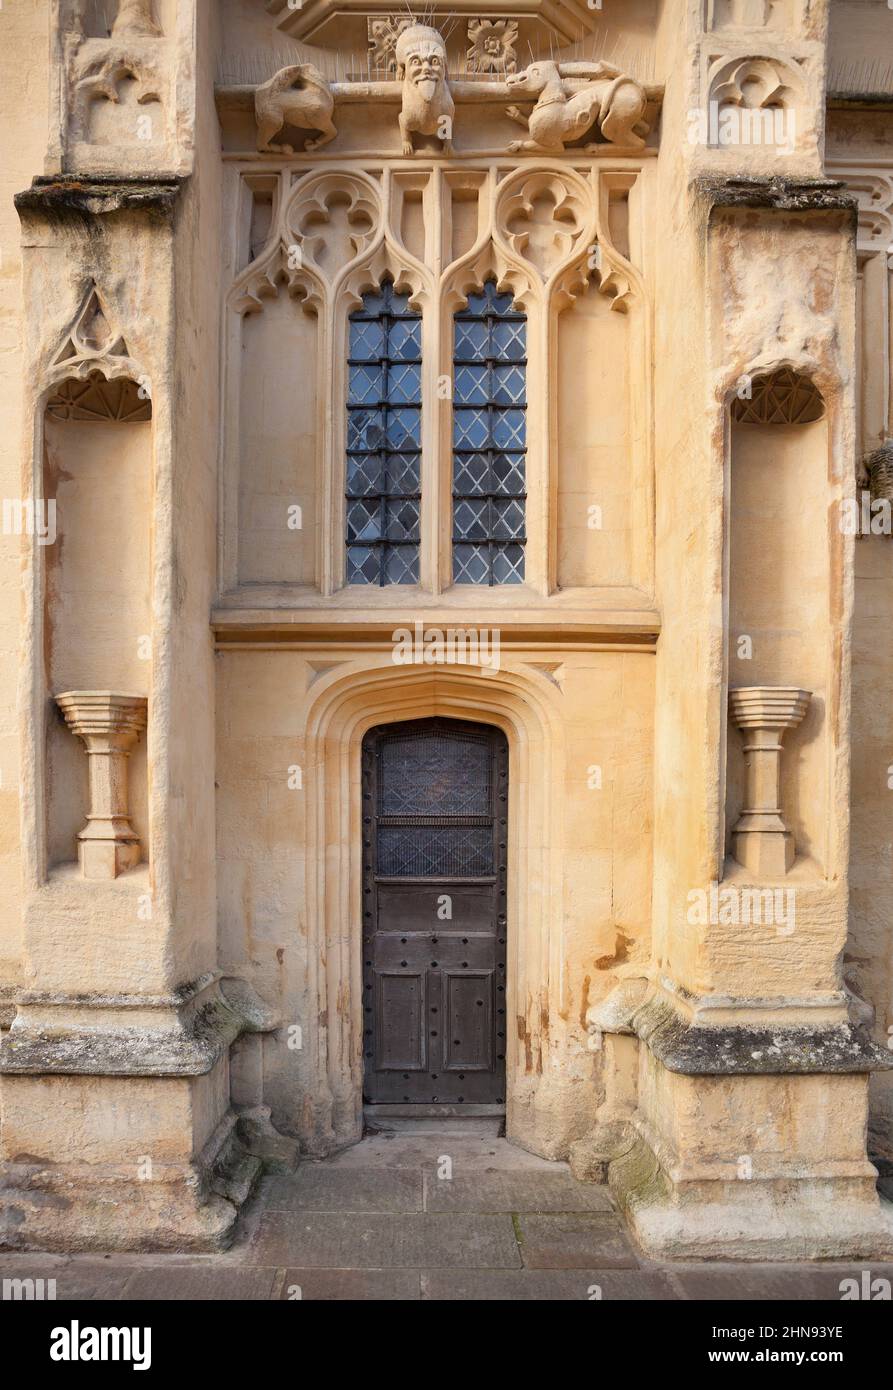 St John Baptist, Parish church, Cirencester, Cotswolds, external architectural detail, medieval doorway Stock Photo